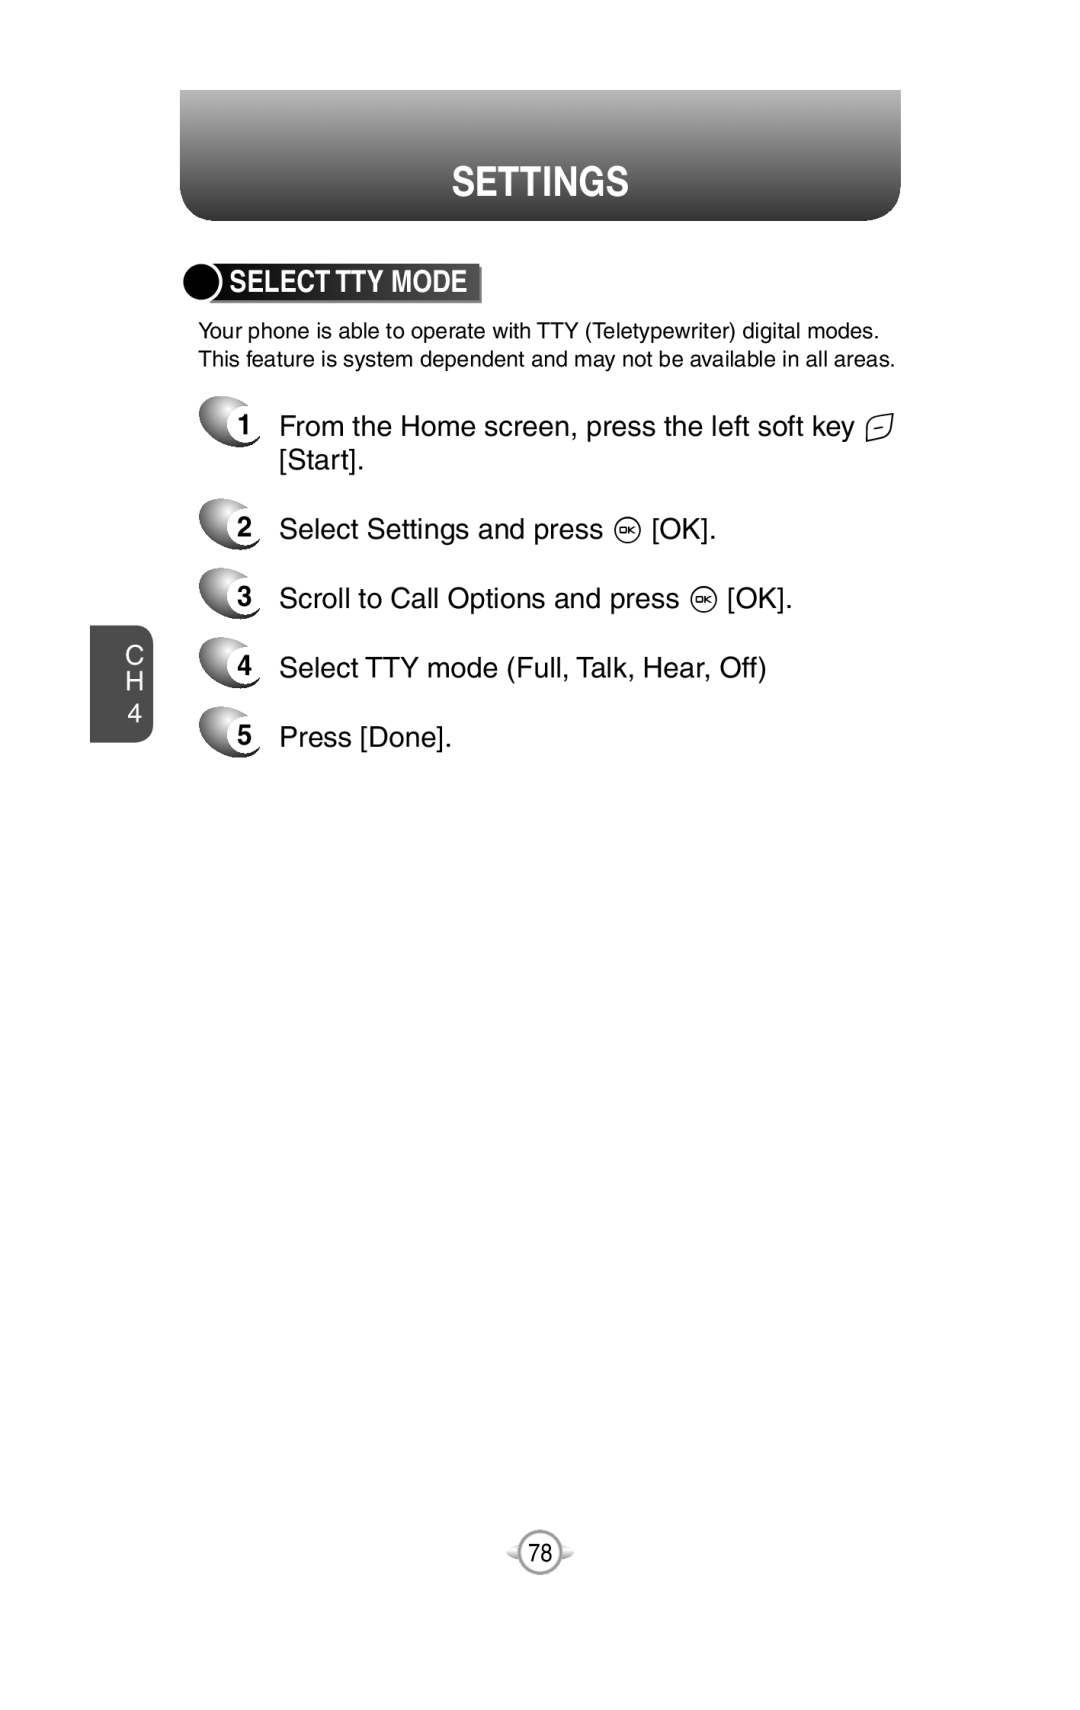 UTStarcom PN-820 Select Tty Mode, 2Select Settings and press O OK, 3Scroll to Call Options and press O OK, Press Done 